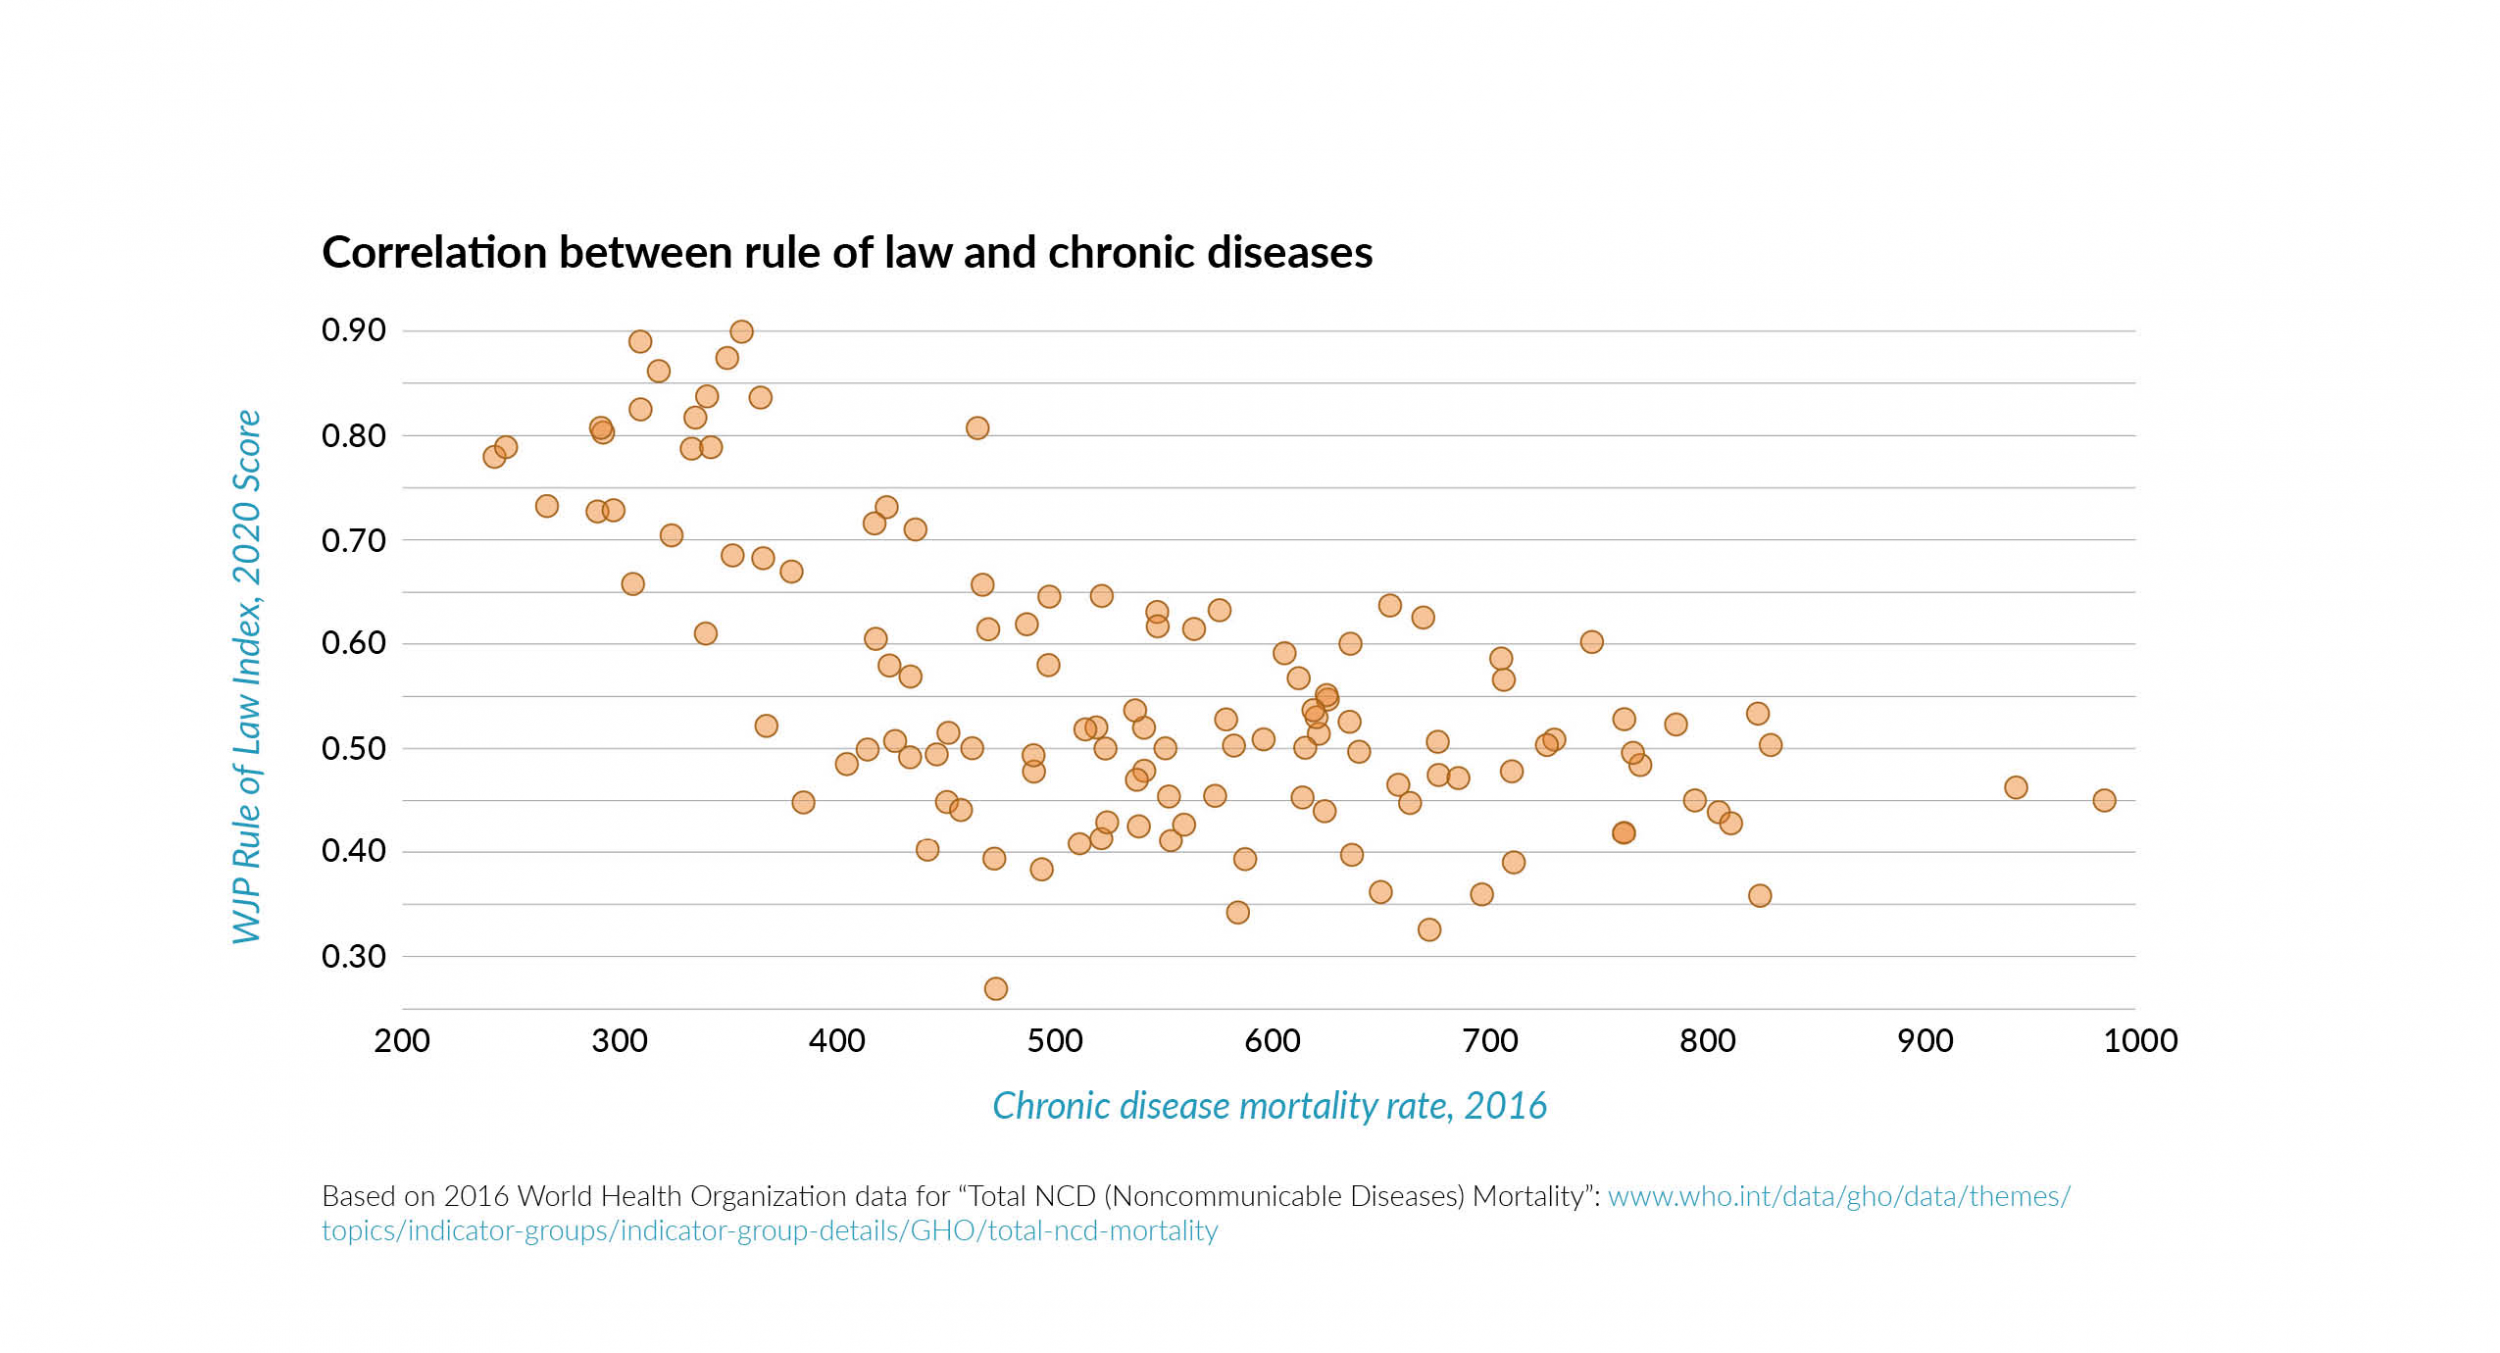 Correlation between chronic diseases and rule of law